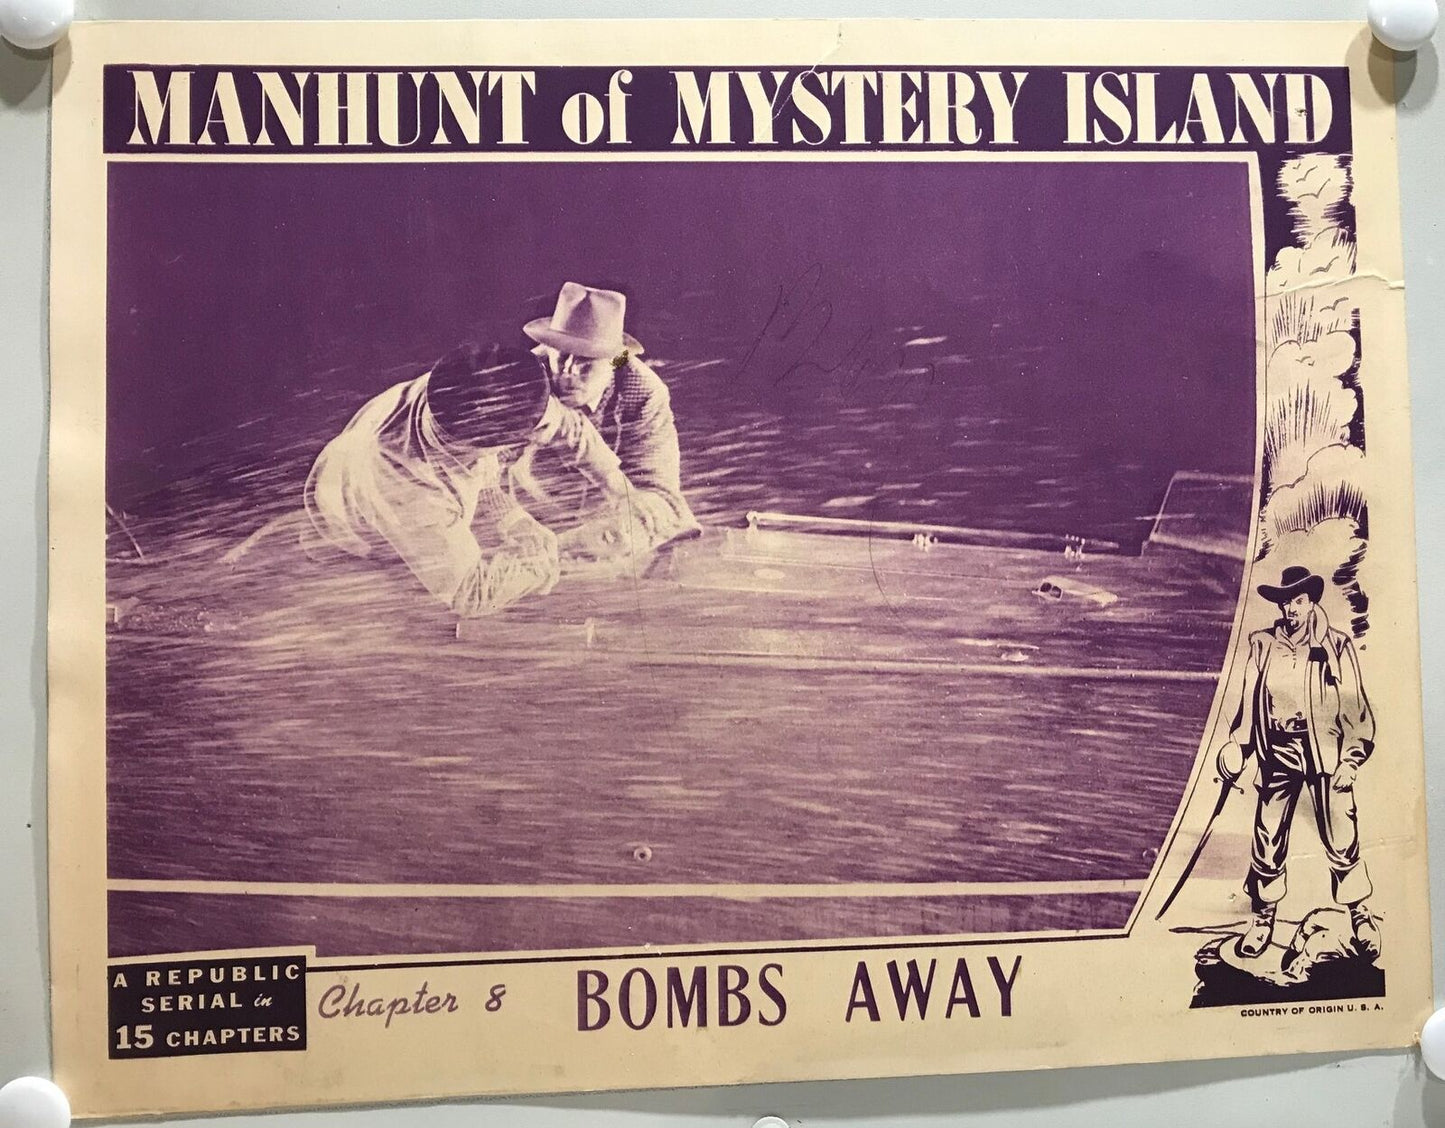 ORIGINAL SERIAL LOBBY CARD - MANHUNT OF MYSTERY ISLAND (a) - 1945 - Ch 8 "Bom...